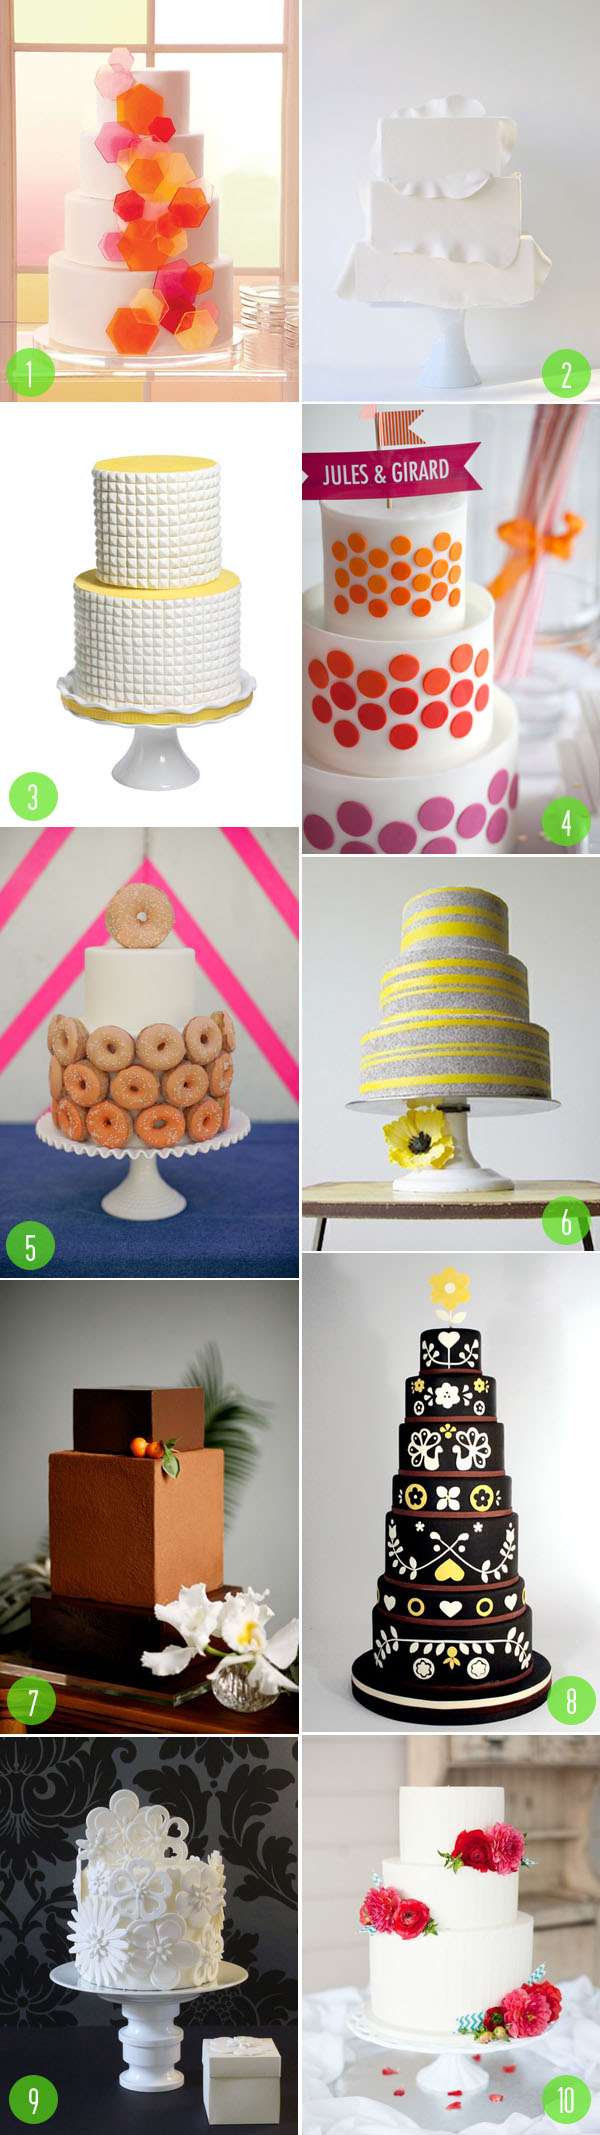 Top 10: Modern wedding cakes | 3